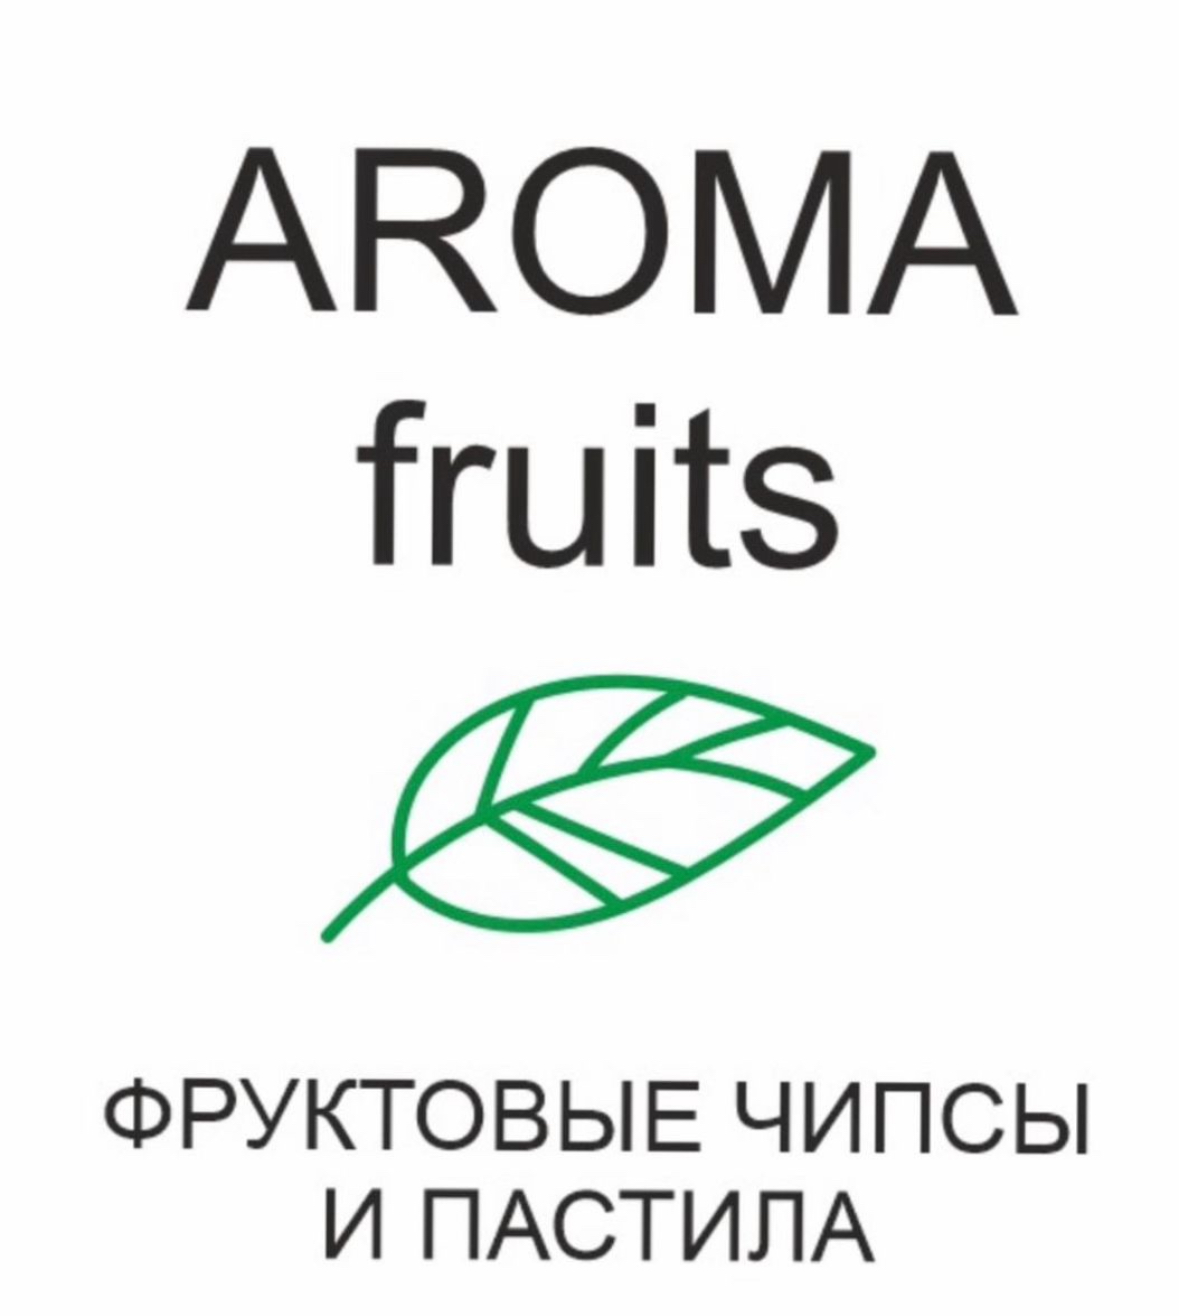 aroma fruits